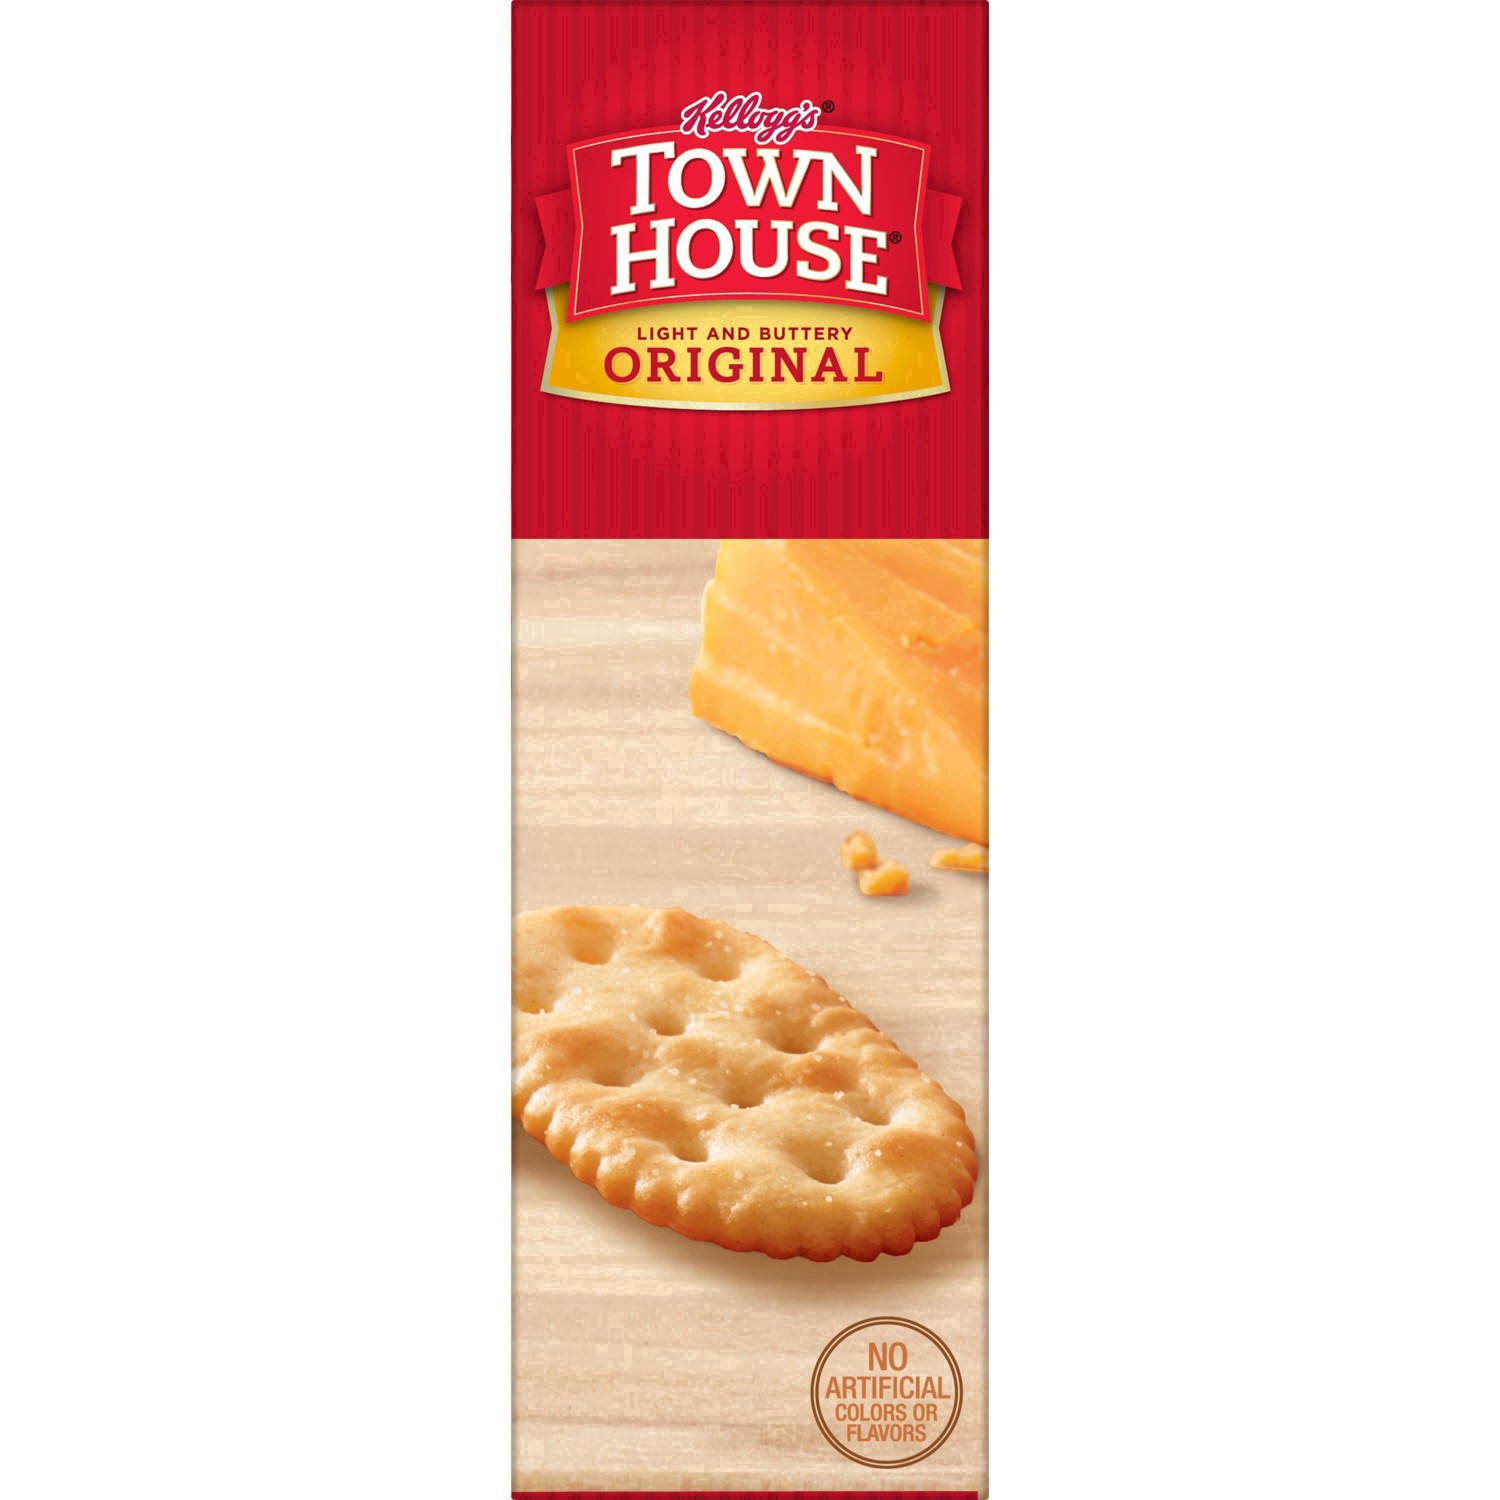 slide 74 of 101, Town House Kellogg's Town House Original Snack Crackers - 13.8oz, 13.8 oz